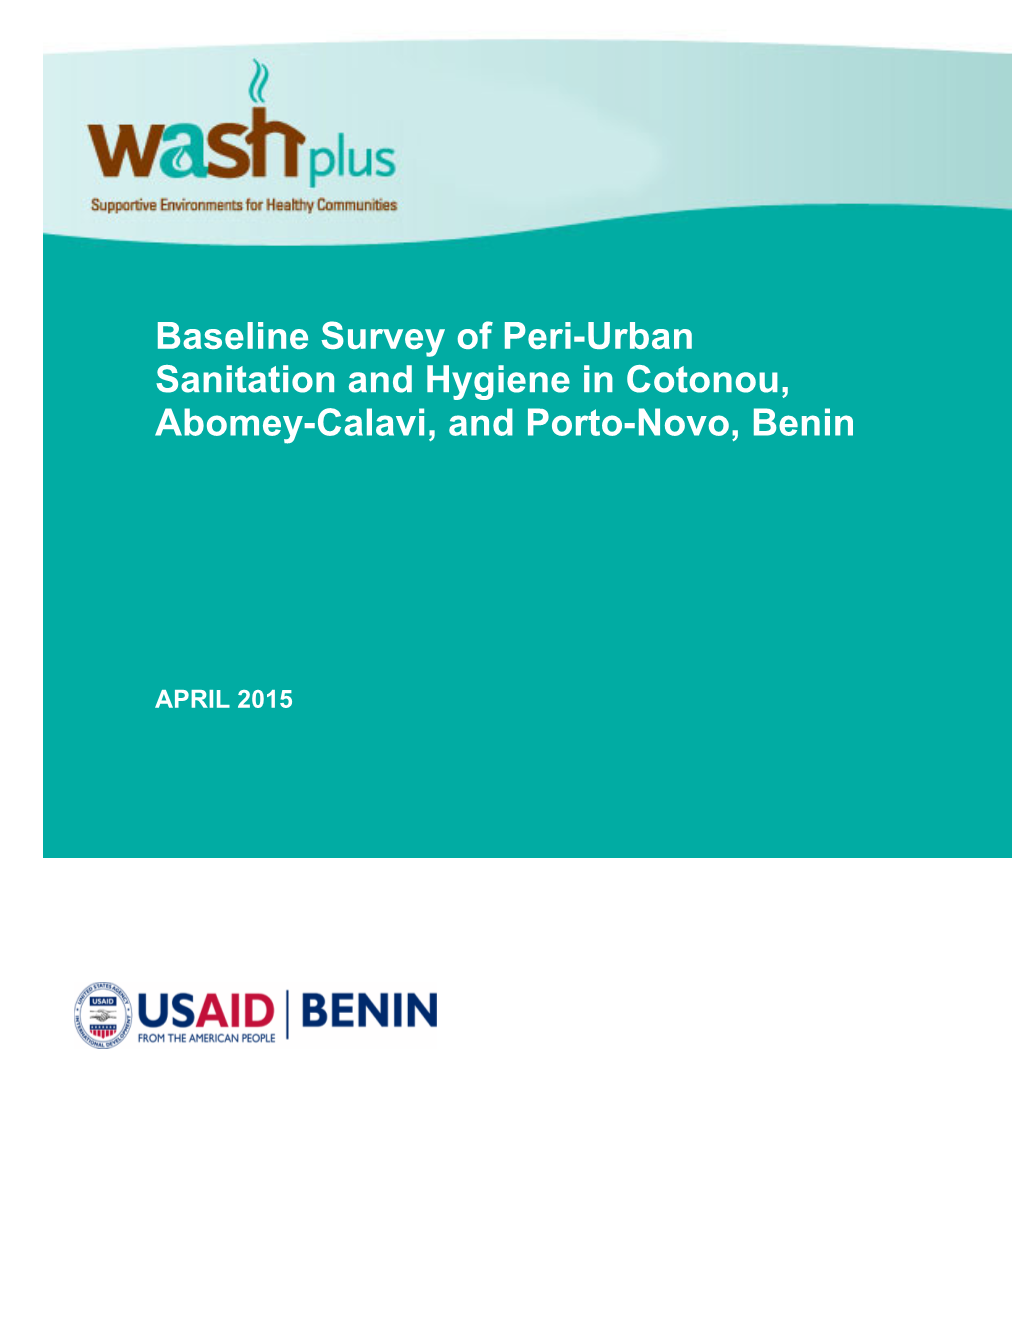 Baseline Survey of Peri-Urban Sanitation and Hygiene in Cotonou, Abomey-Calavi, and Porto-Novo, Benin